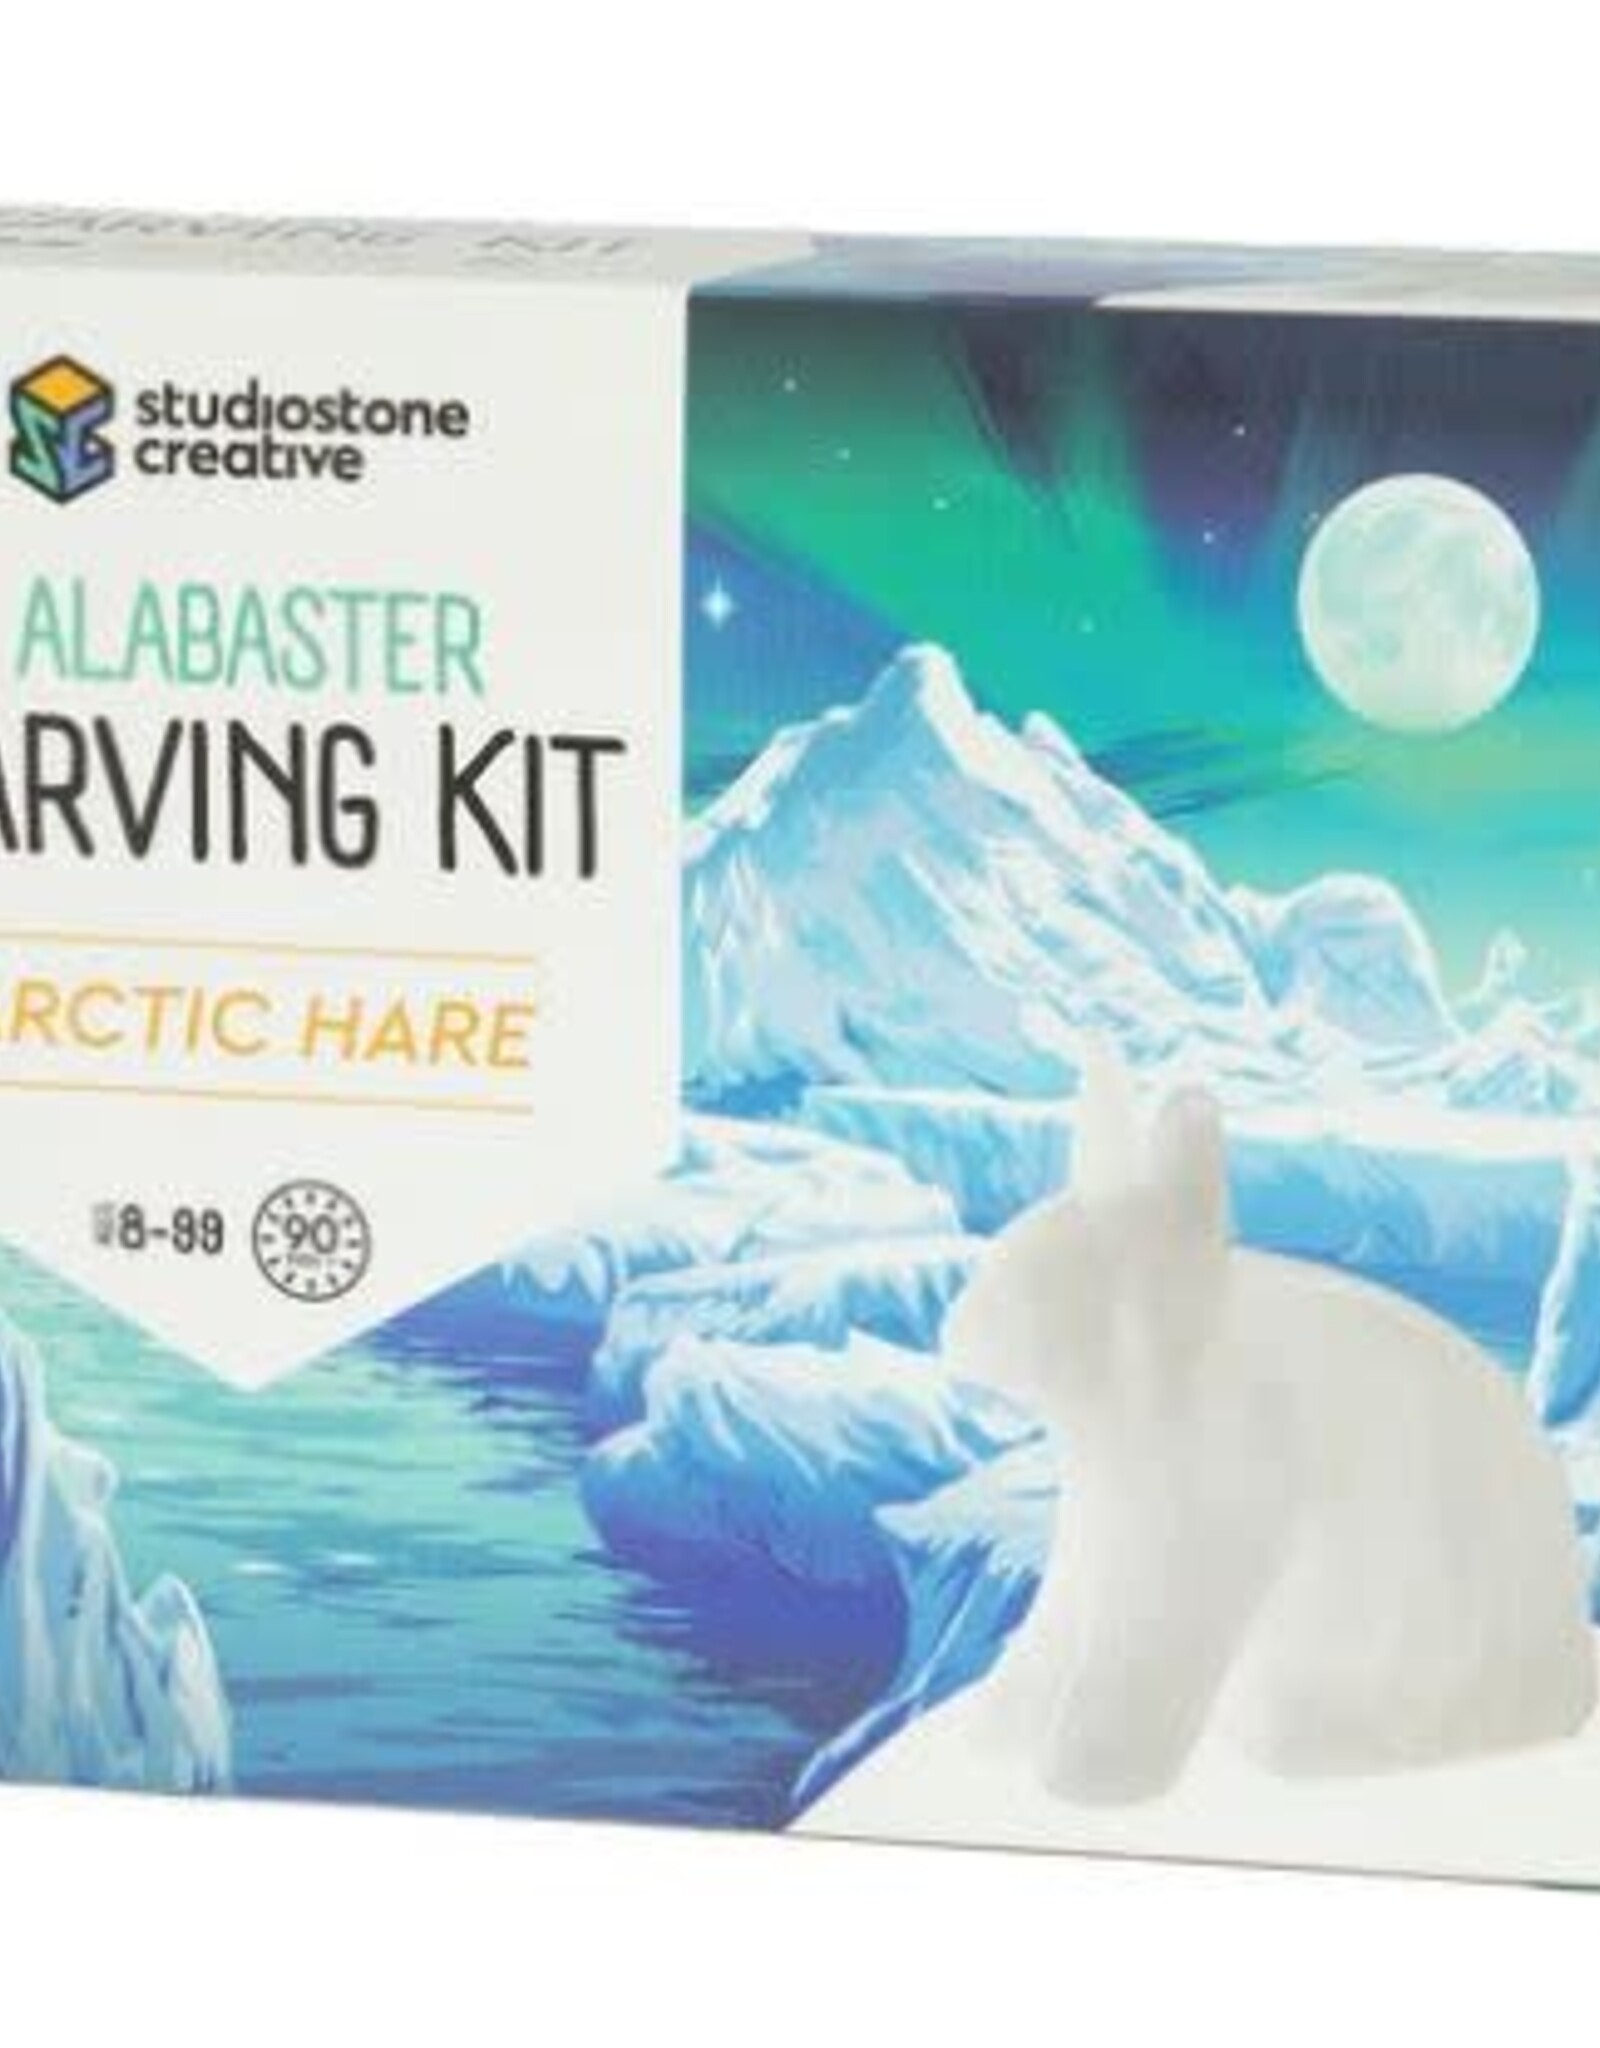 Studiostone Creative Arctic Hare Alabaster Carving Kit 8+